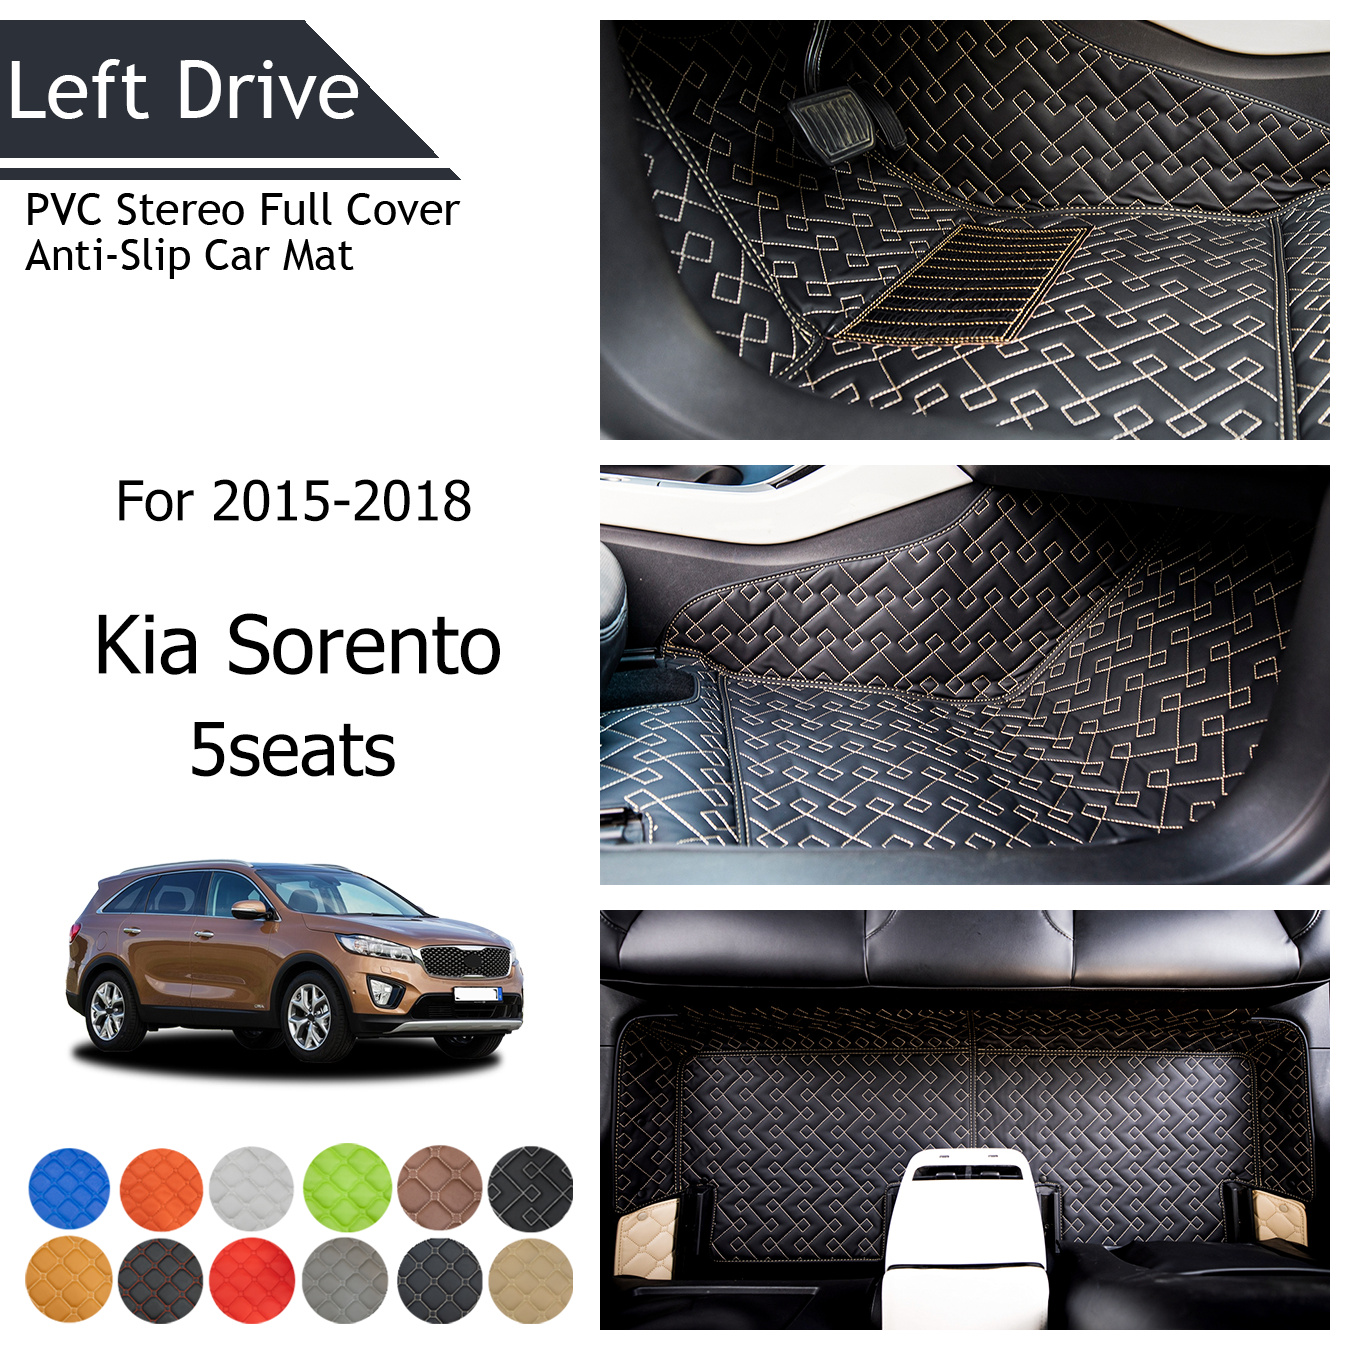 

Tegart[lhd]fits For 2015-2018 Kia Sorento (5seats) 3 Layer Pvc Stereo Full Cover Anti-slip Car Mat